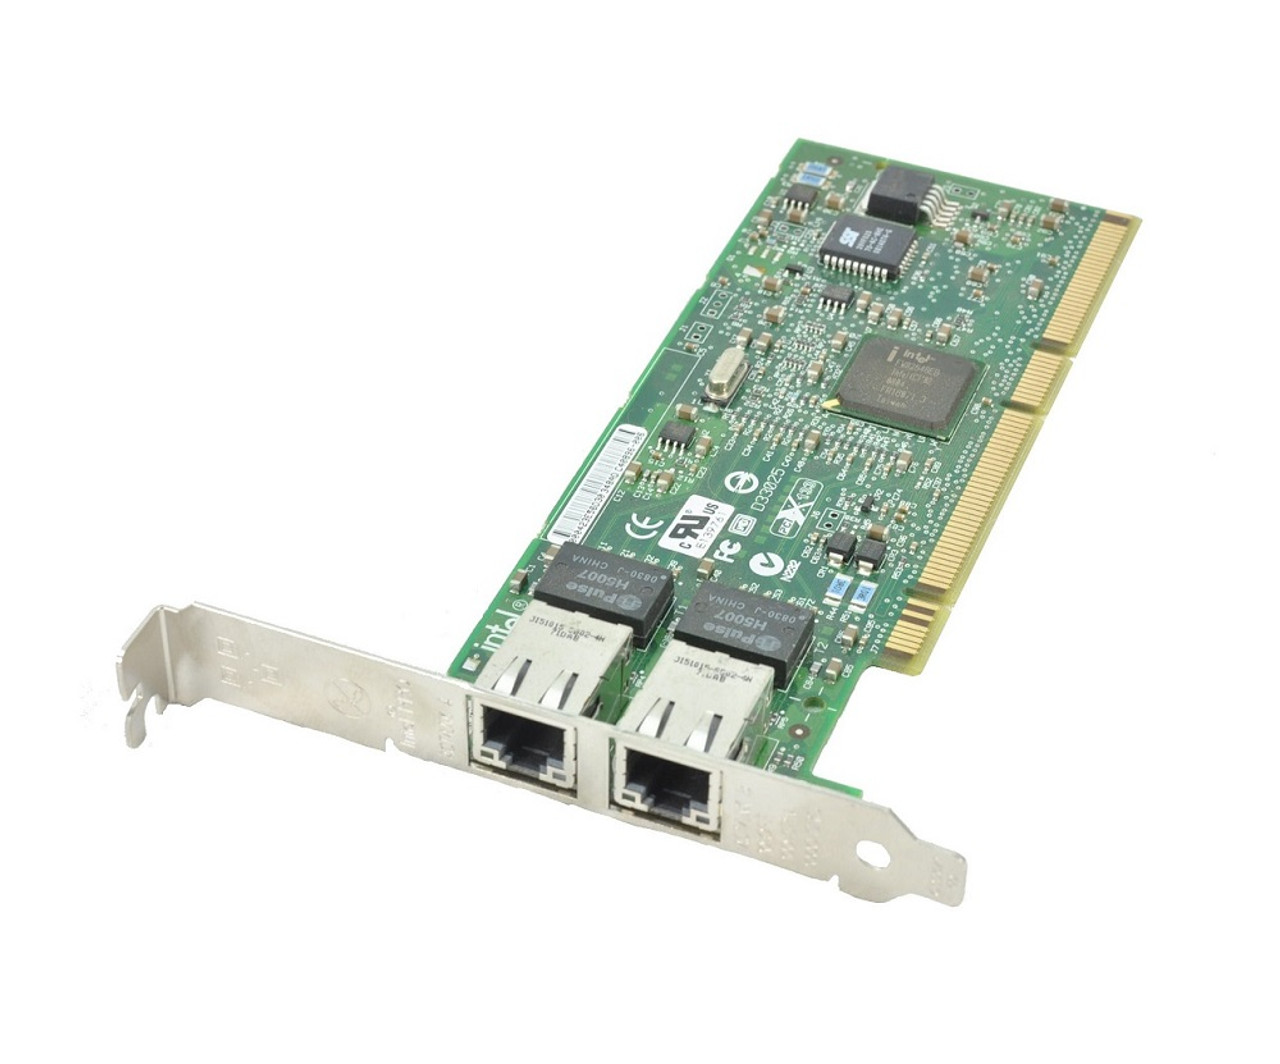 313560-001 - HP NC6170 PCI-x 2-Port Fiber Channel 1000Base-SX Gigabit Ethernet Server Adapter Network Interface Card (NIC)